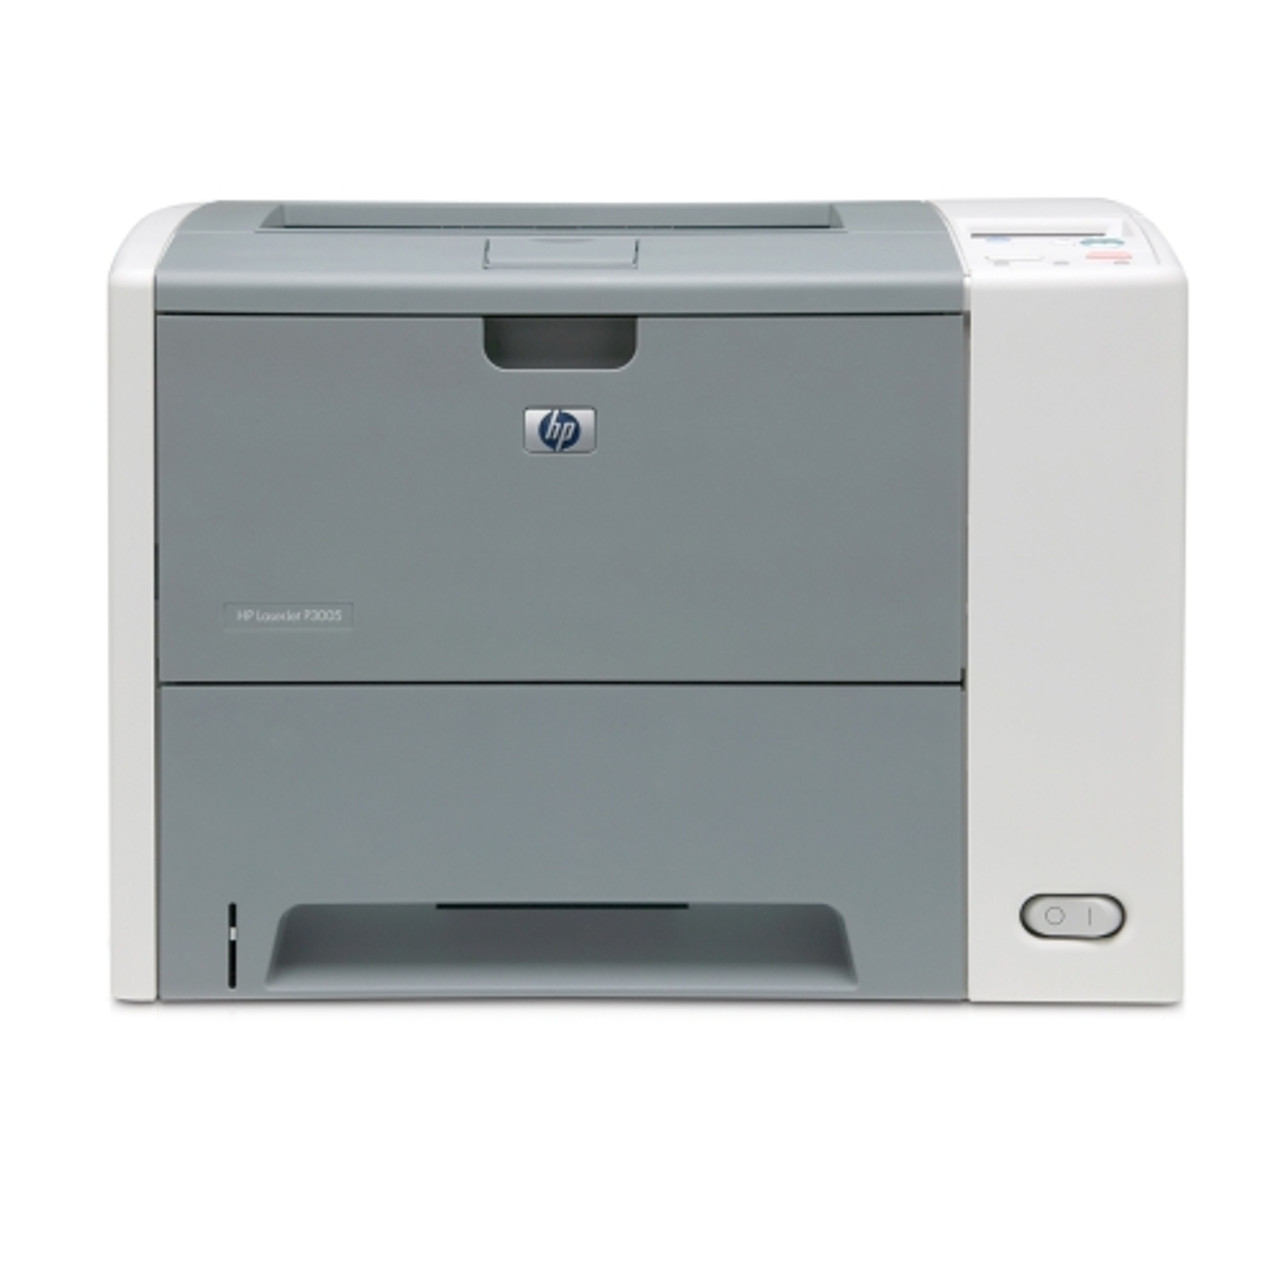 HP LaserJet P3005d - Q7813A - HP Laser Printer for sale